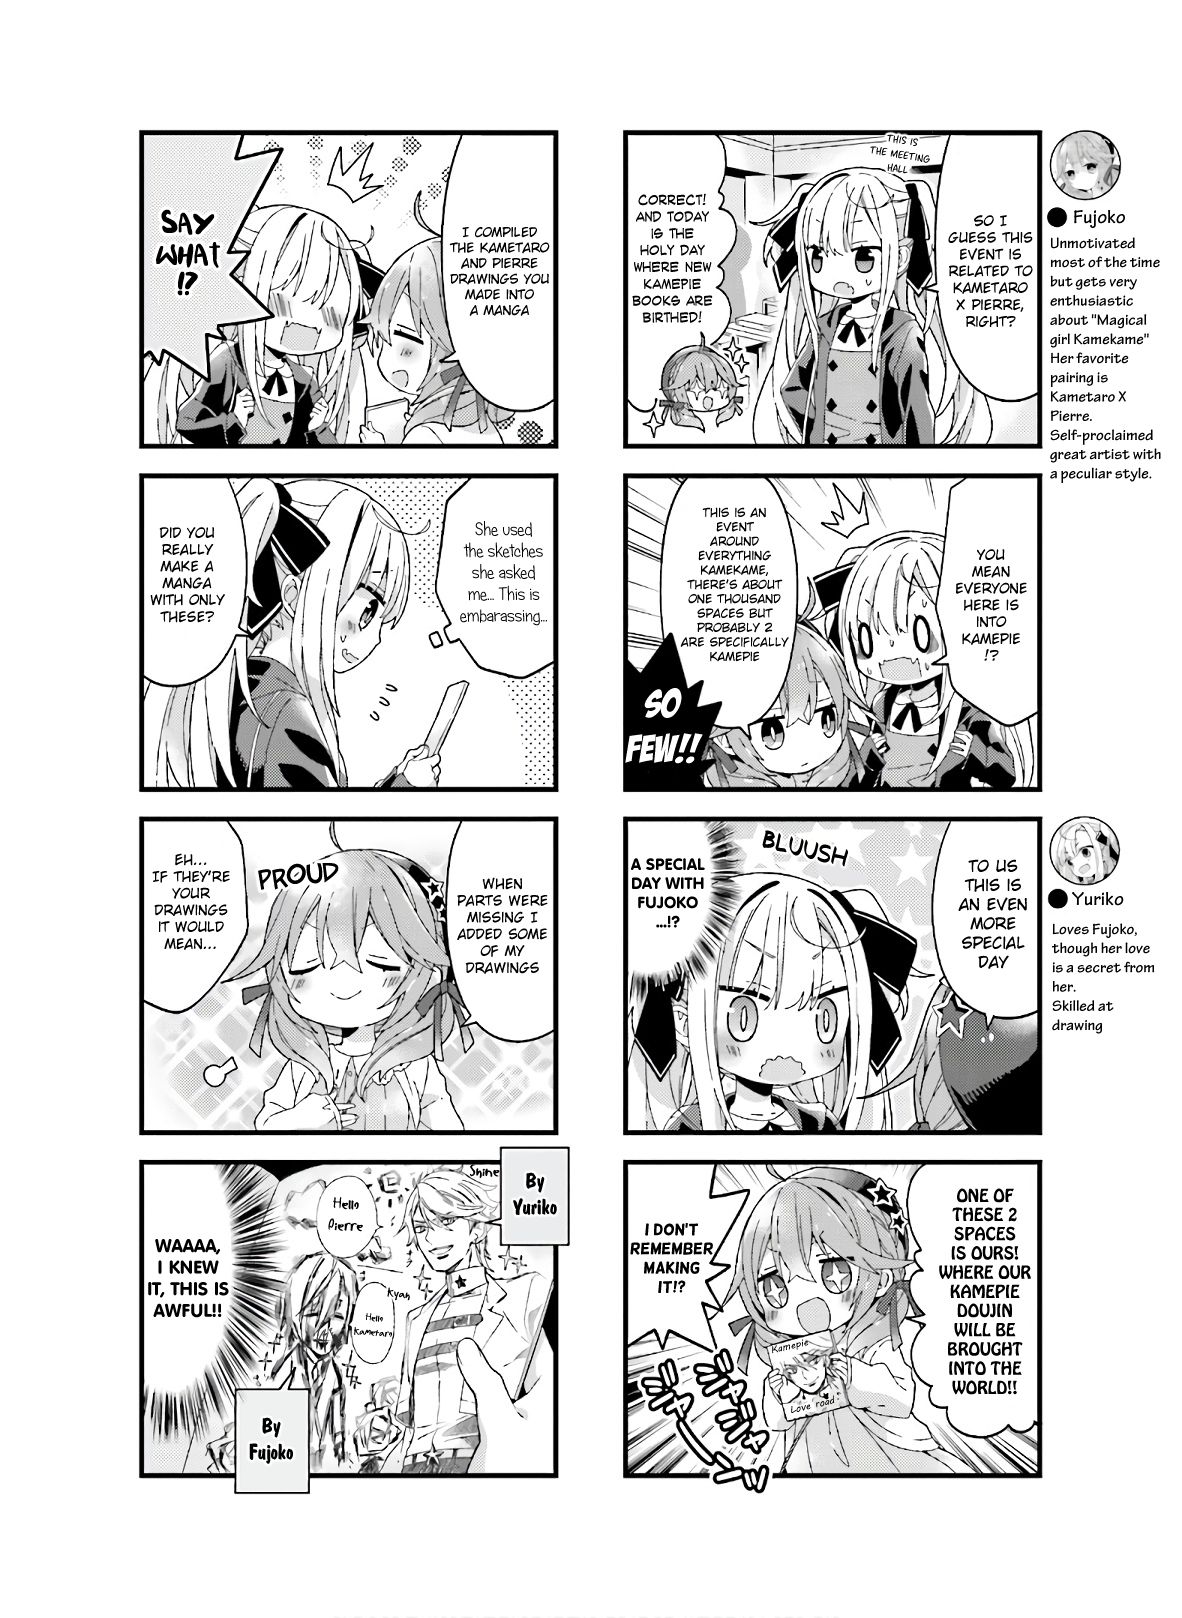 Fujoko to Yuriko - chapter 4 - #2